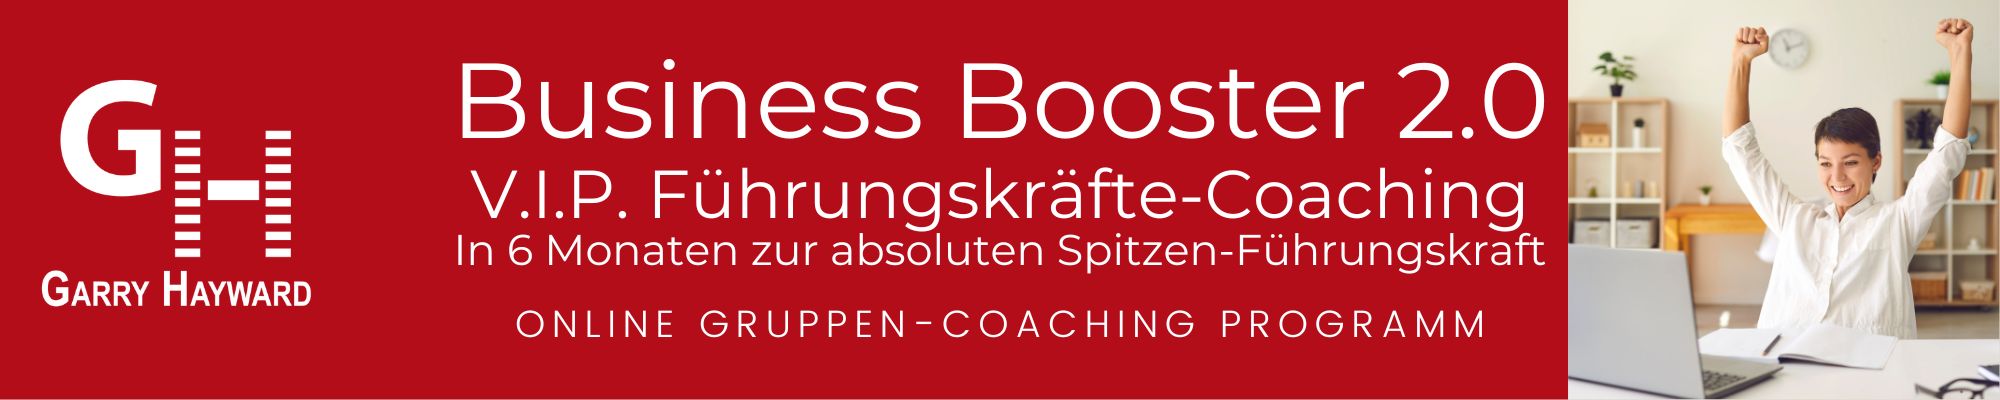 Business Booster 2.0 Online Coaching Programm